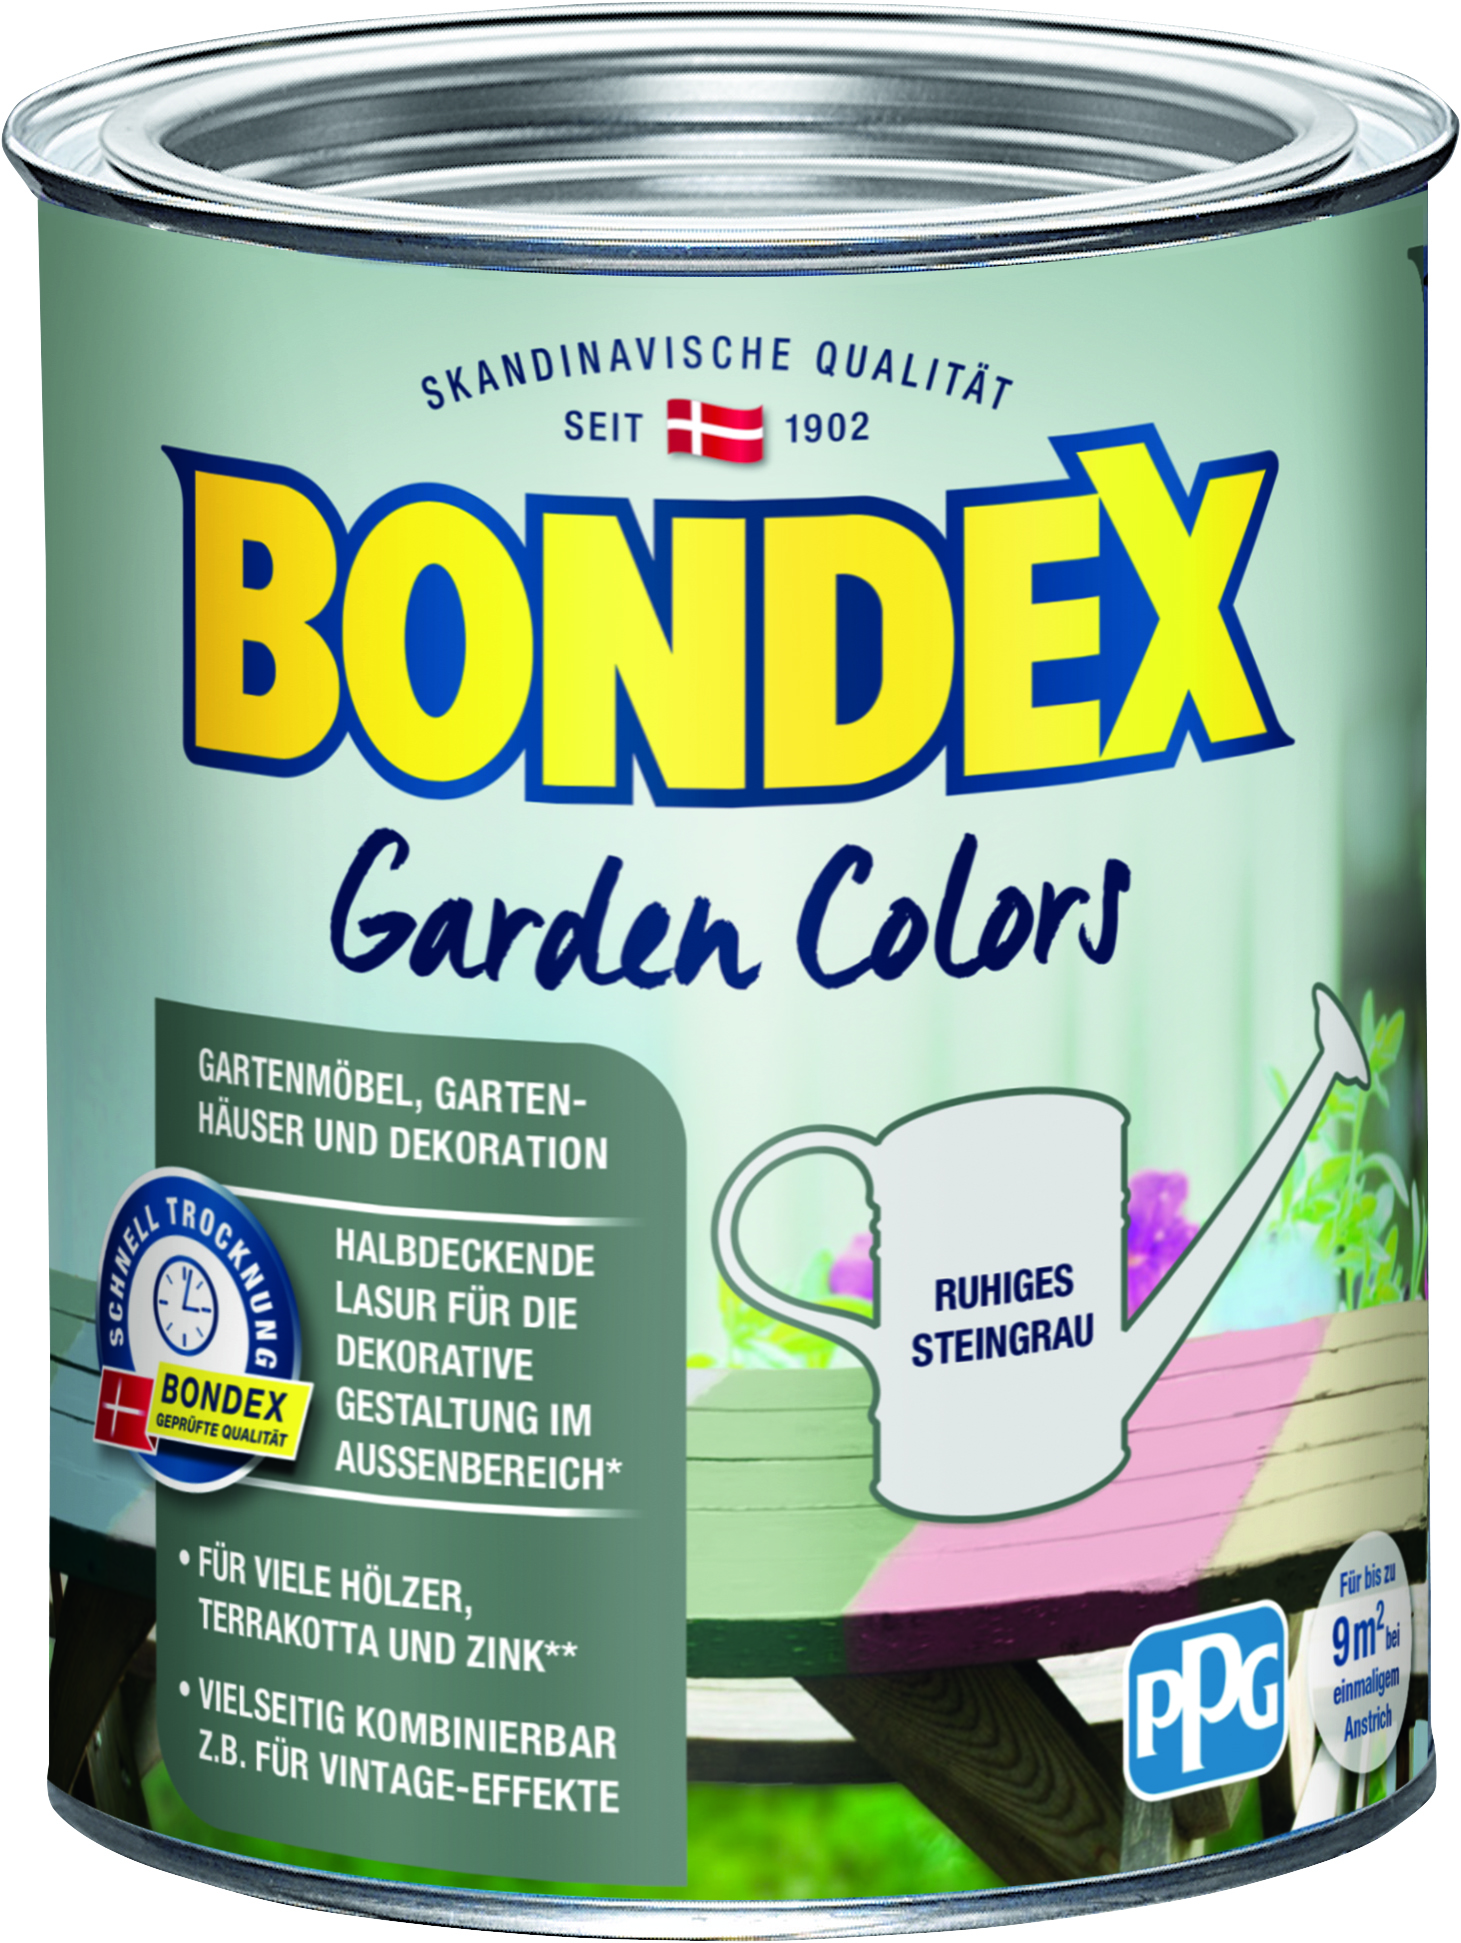 Bondex Garden Colors Ruhiges Steingrau, 750ml